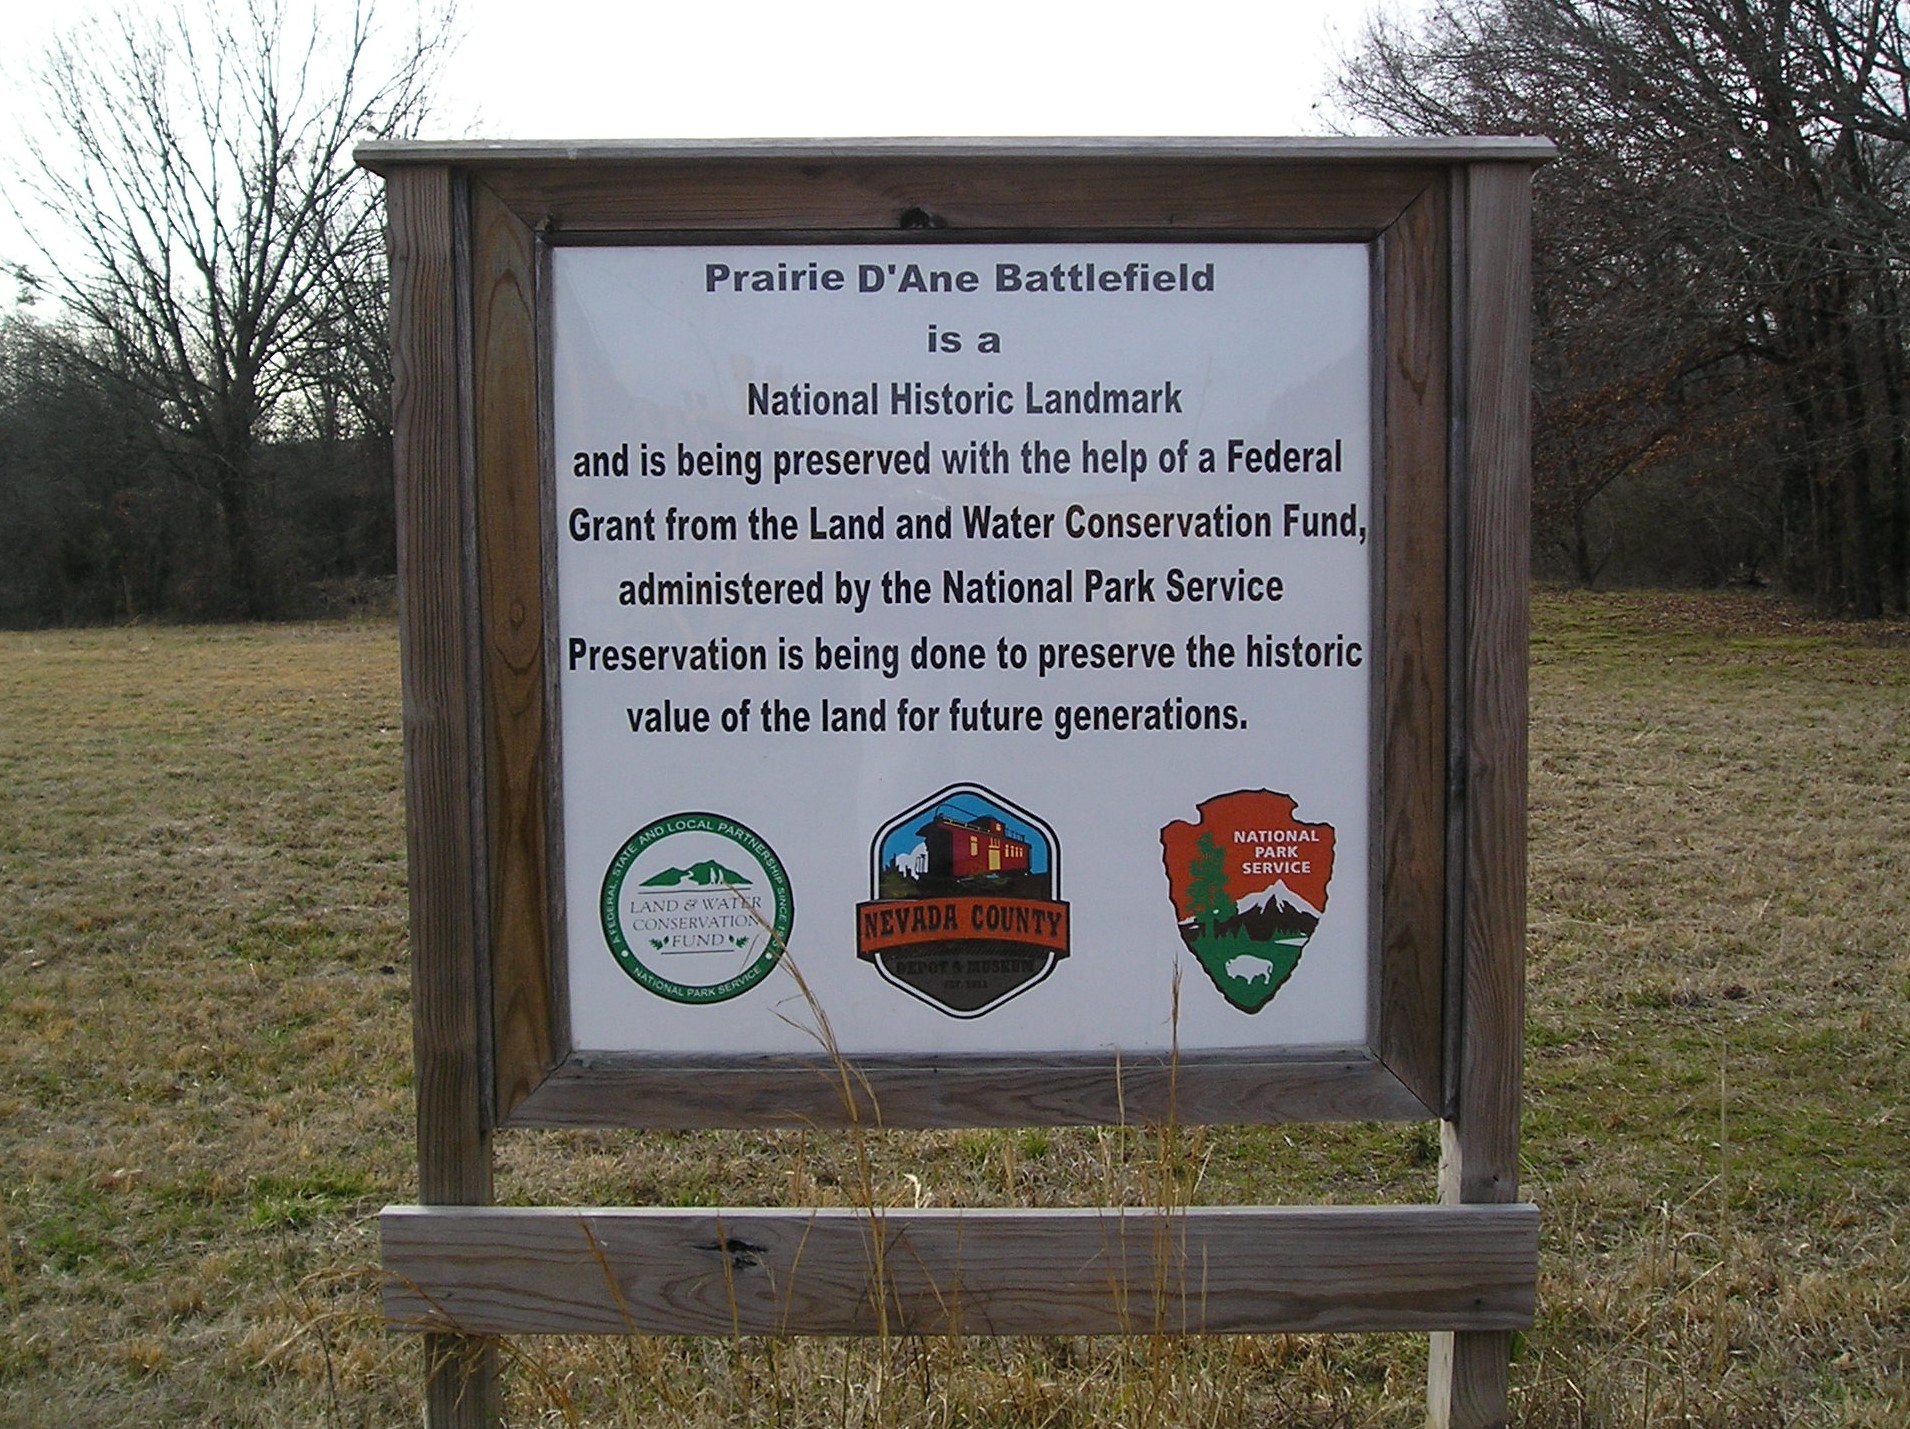 Prairie D'Ane Battlefield as a National Historic Landmark